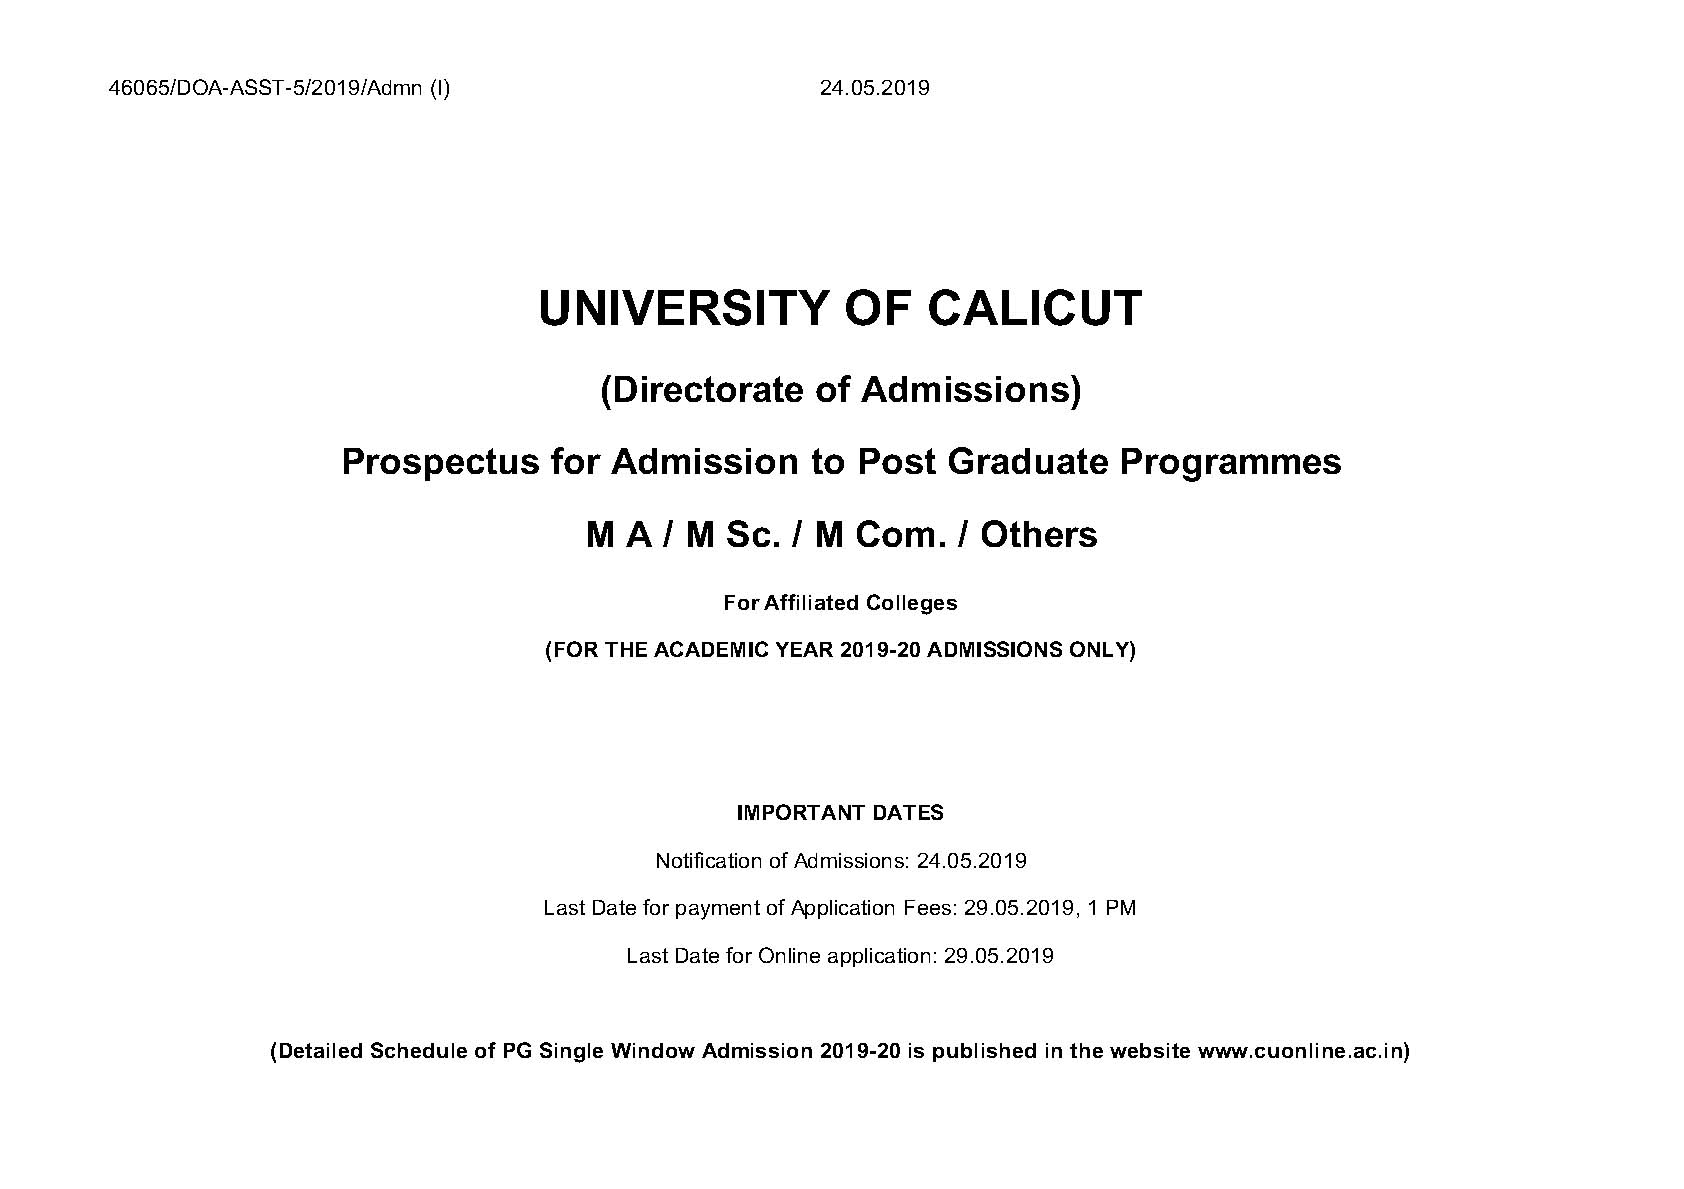 Calicut University Prospectus For PG Programmes Admisison 2019 - Notification Image 1